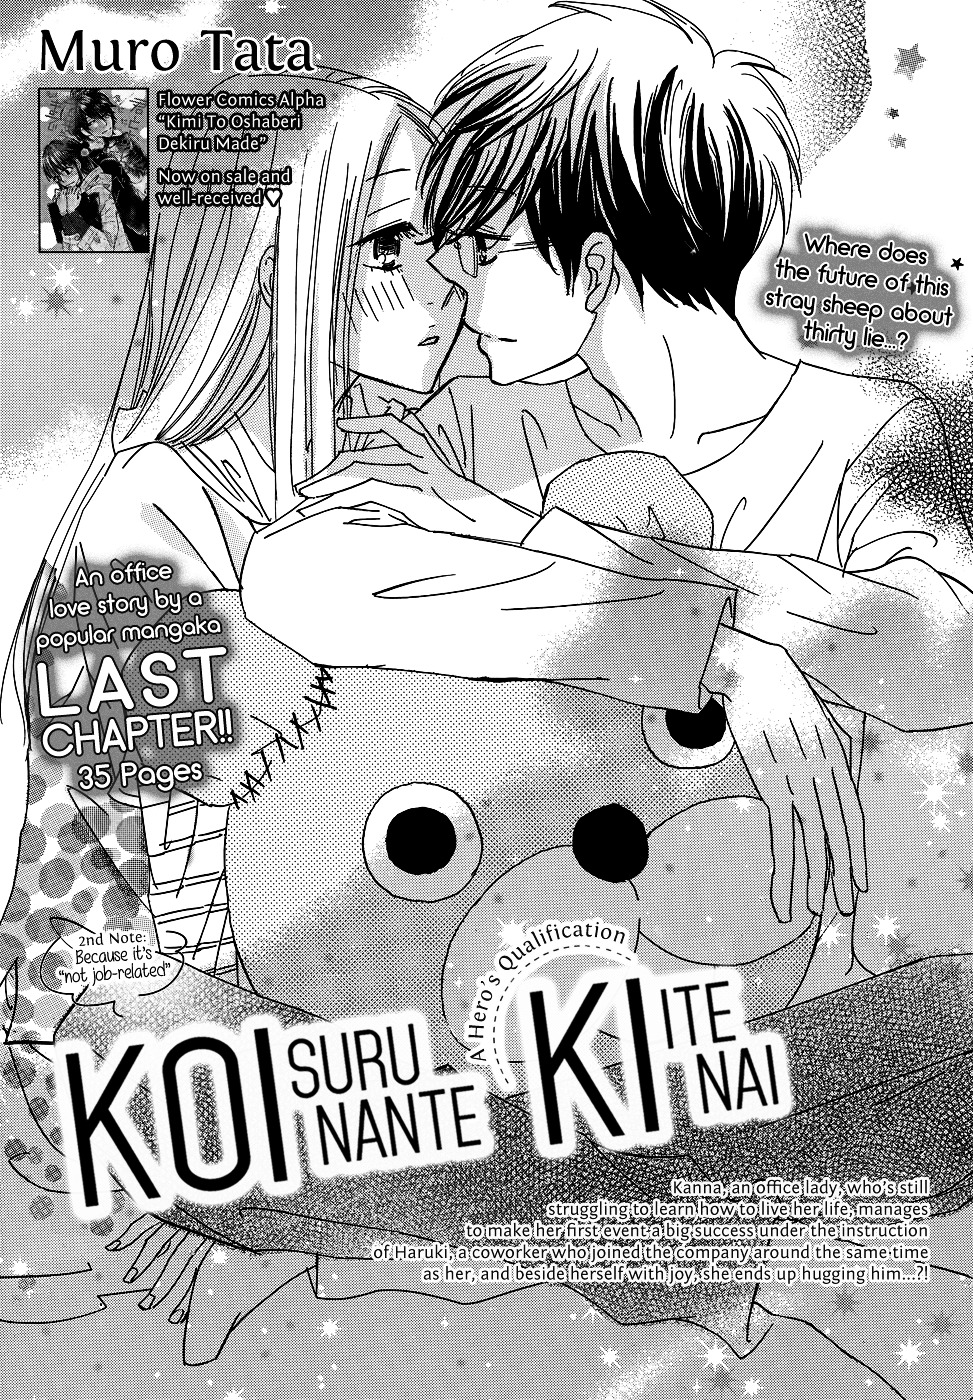 Koisuru Nante Kiitenai Vol.1 Chapter 3 : Because It S 